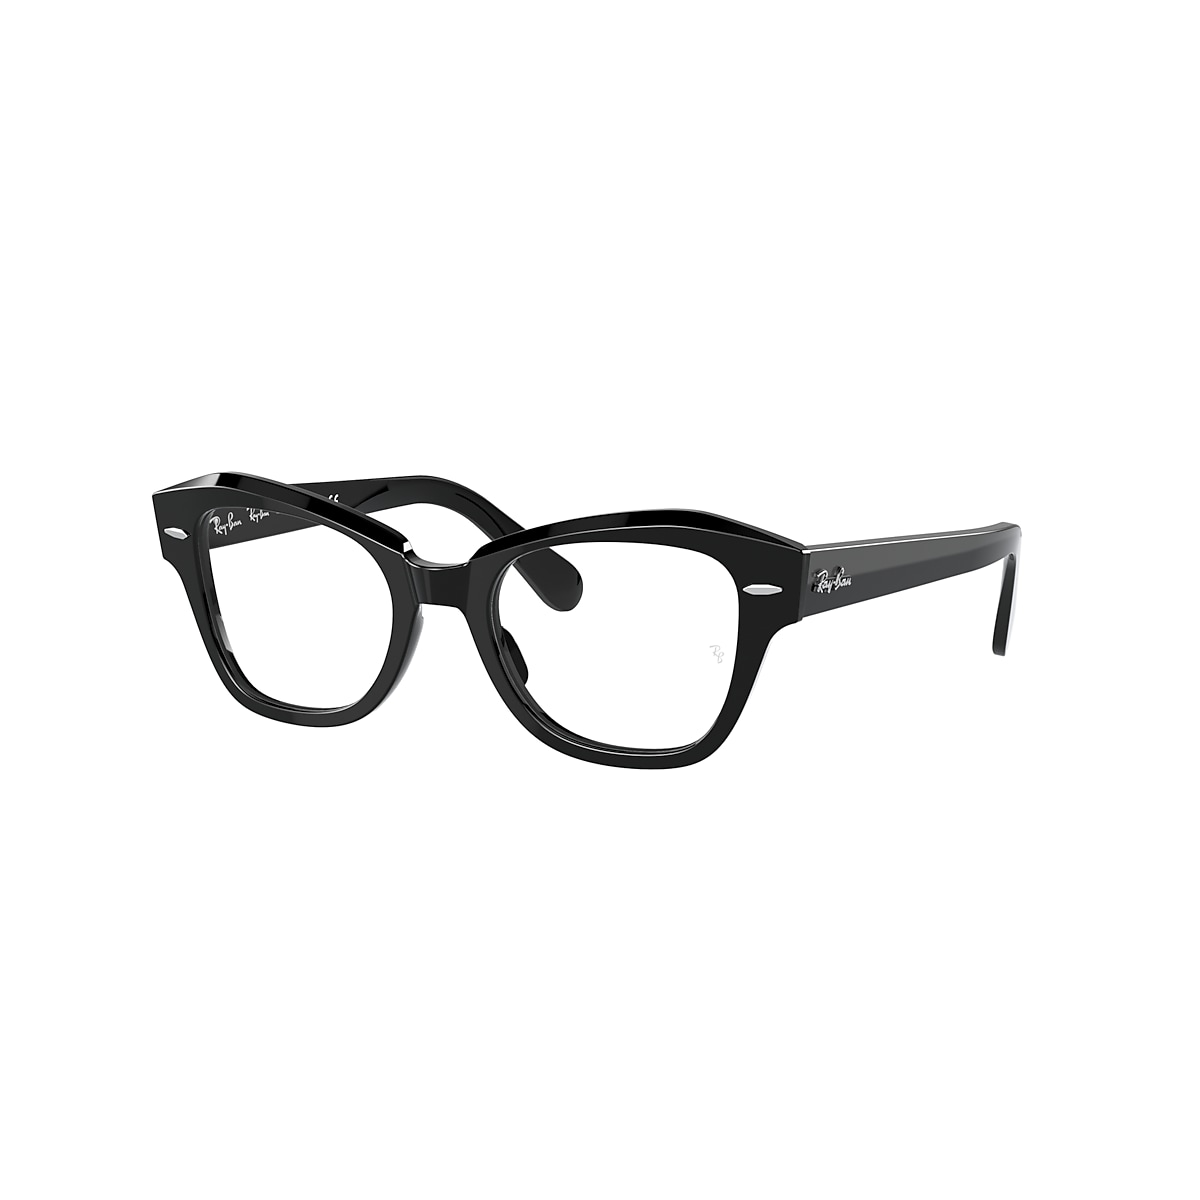 STATE STREET OPTICS Eyeglasses with Black Frame - Ray-Ban